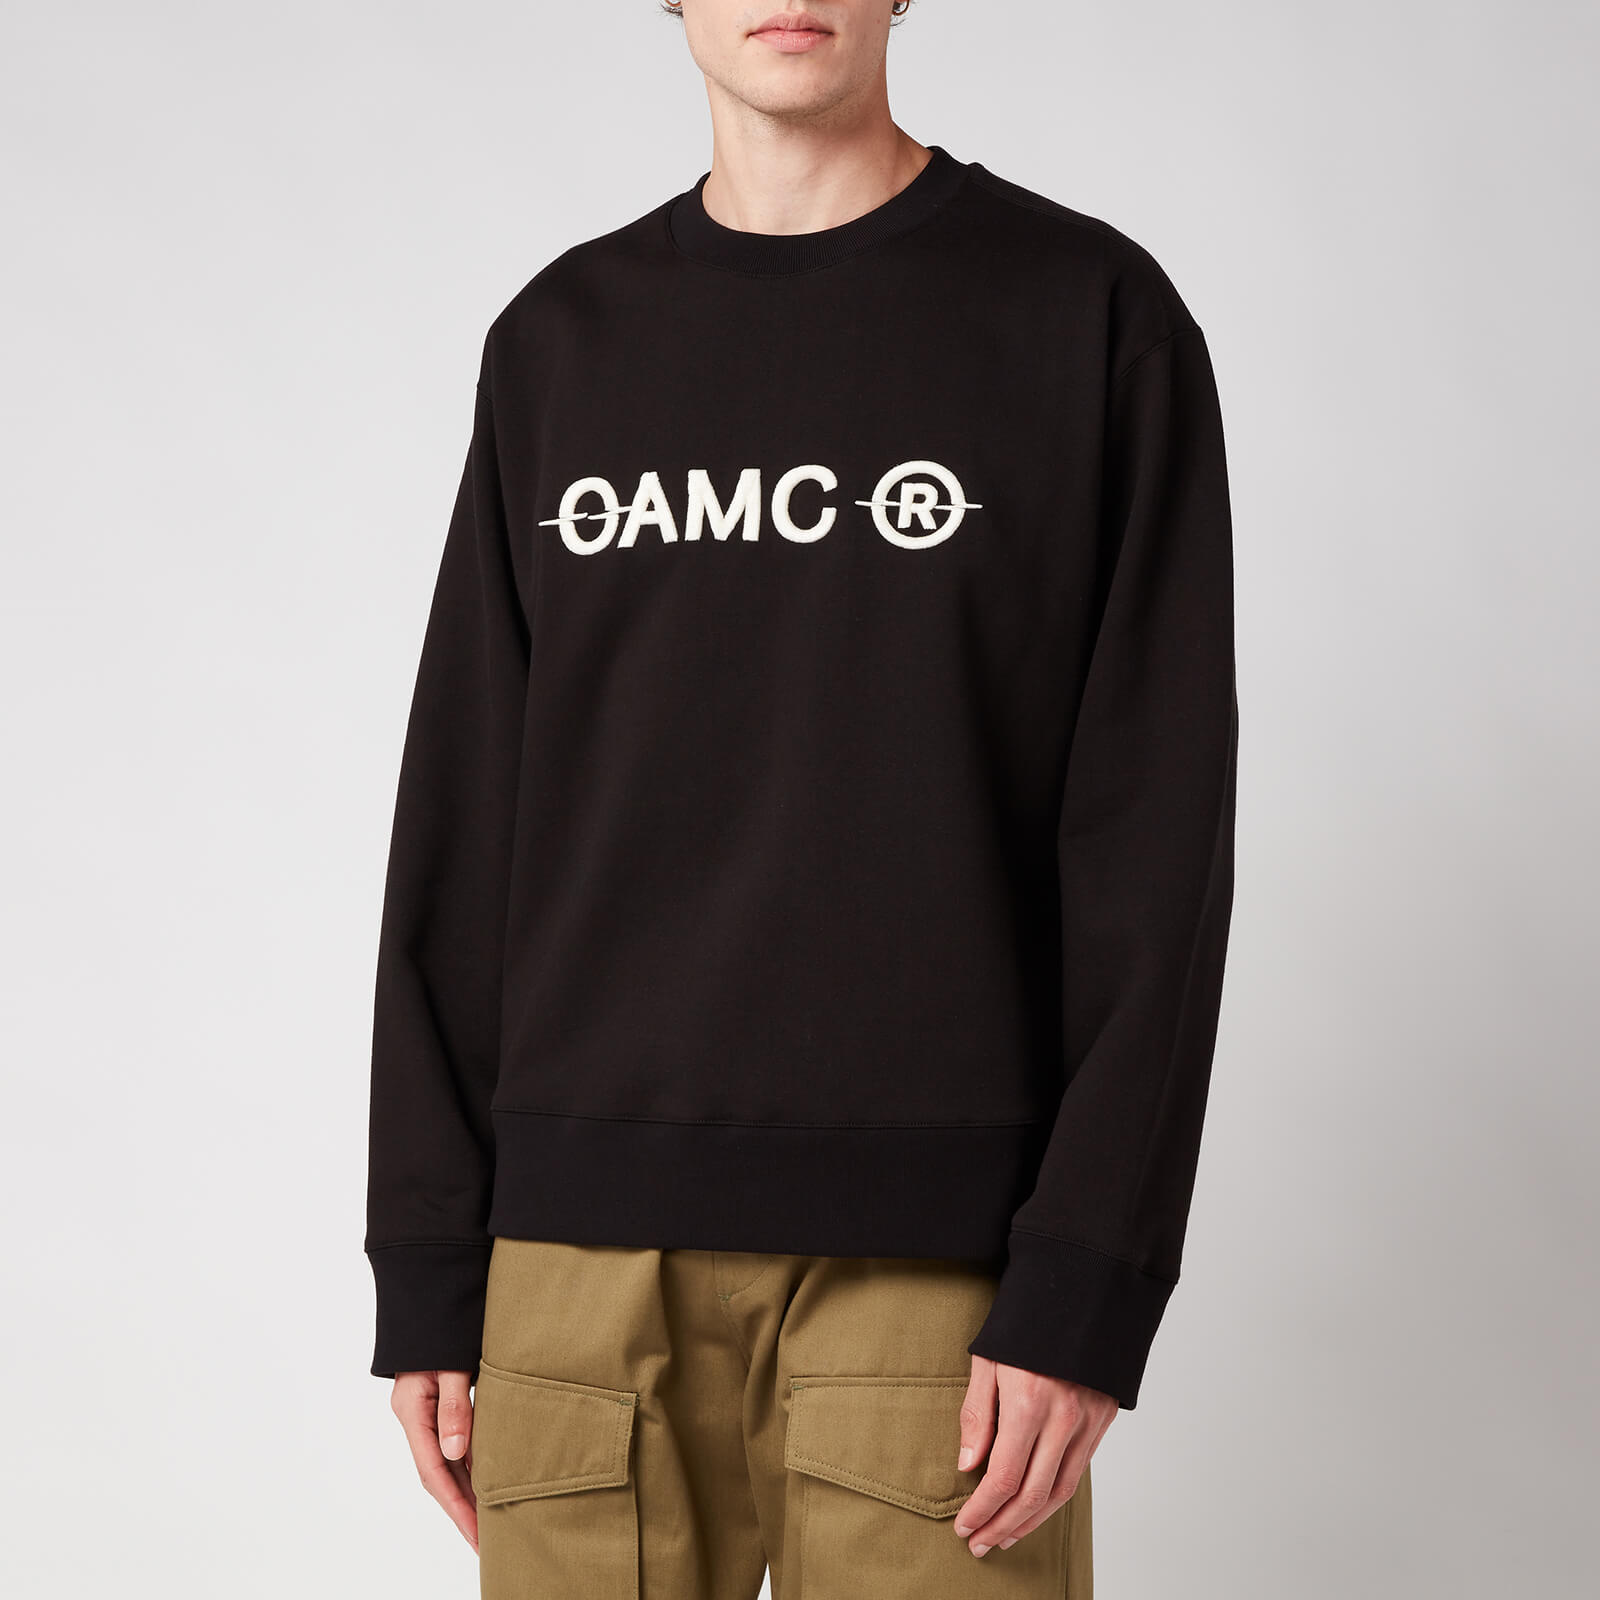 OAMC Men's Tilt Sweatshirt - Black - S